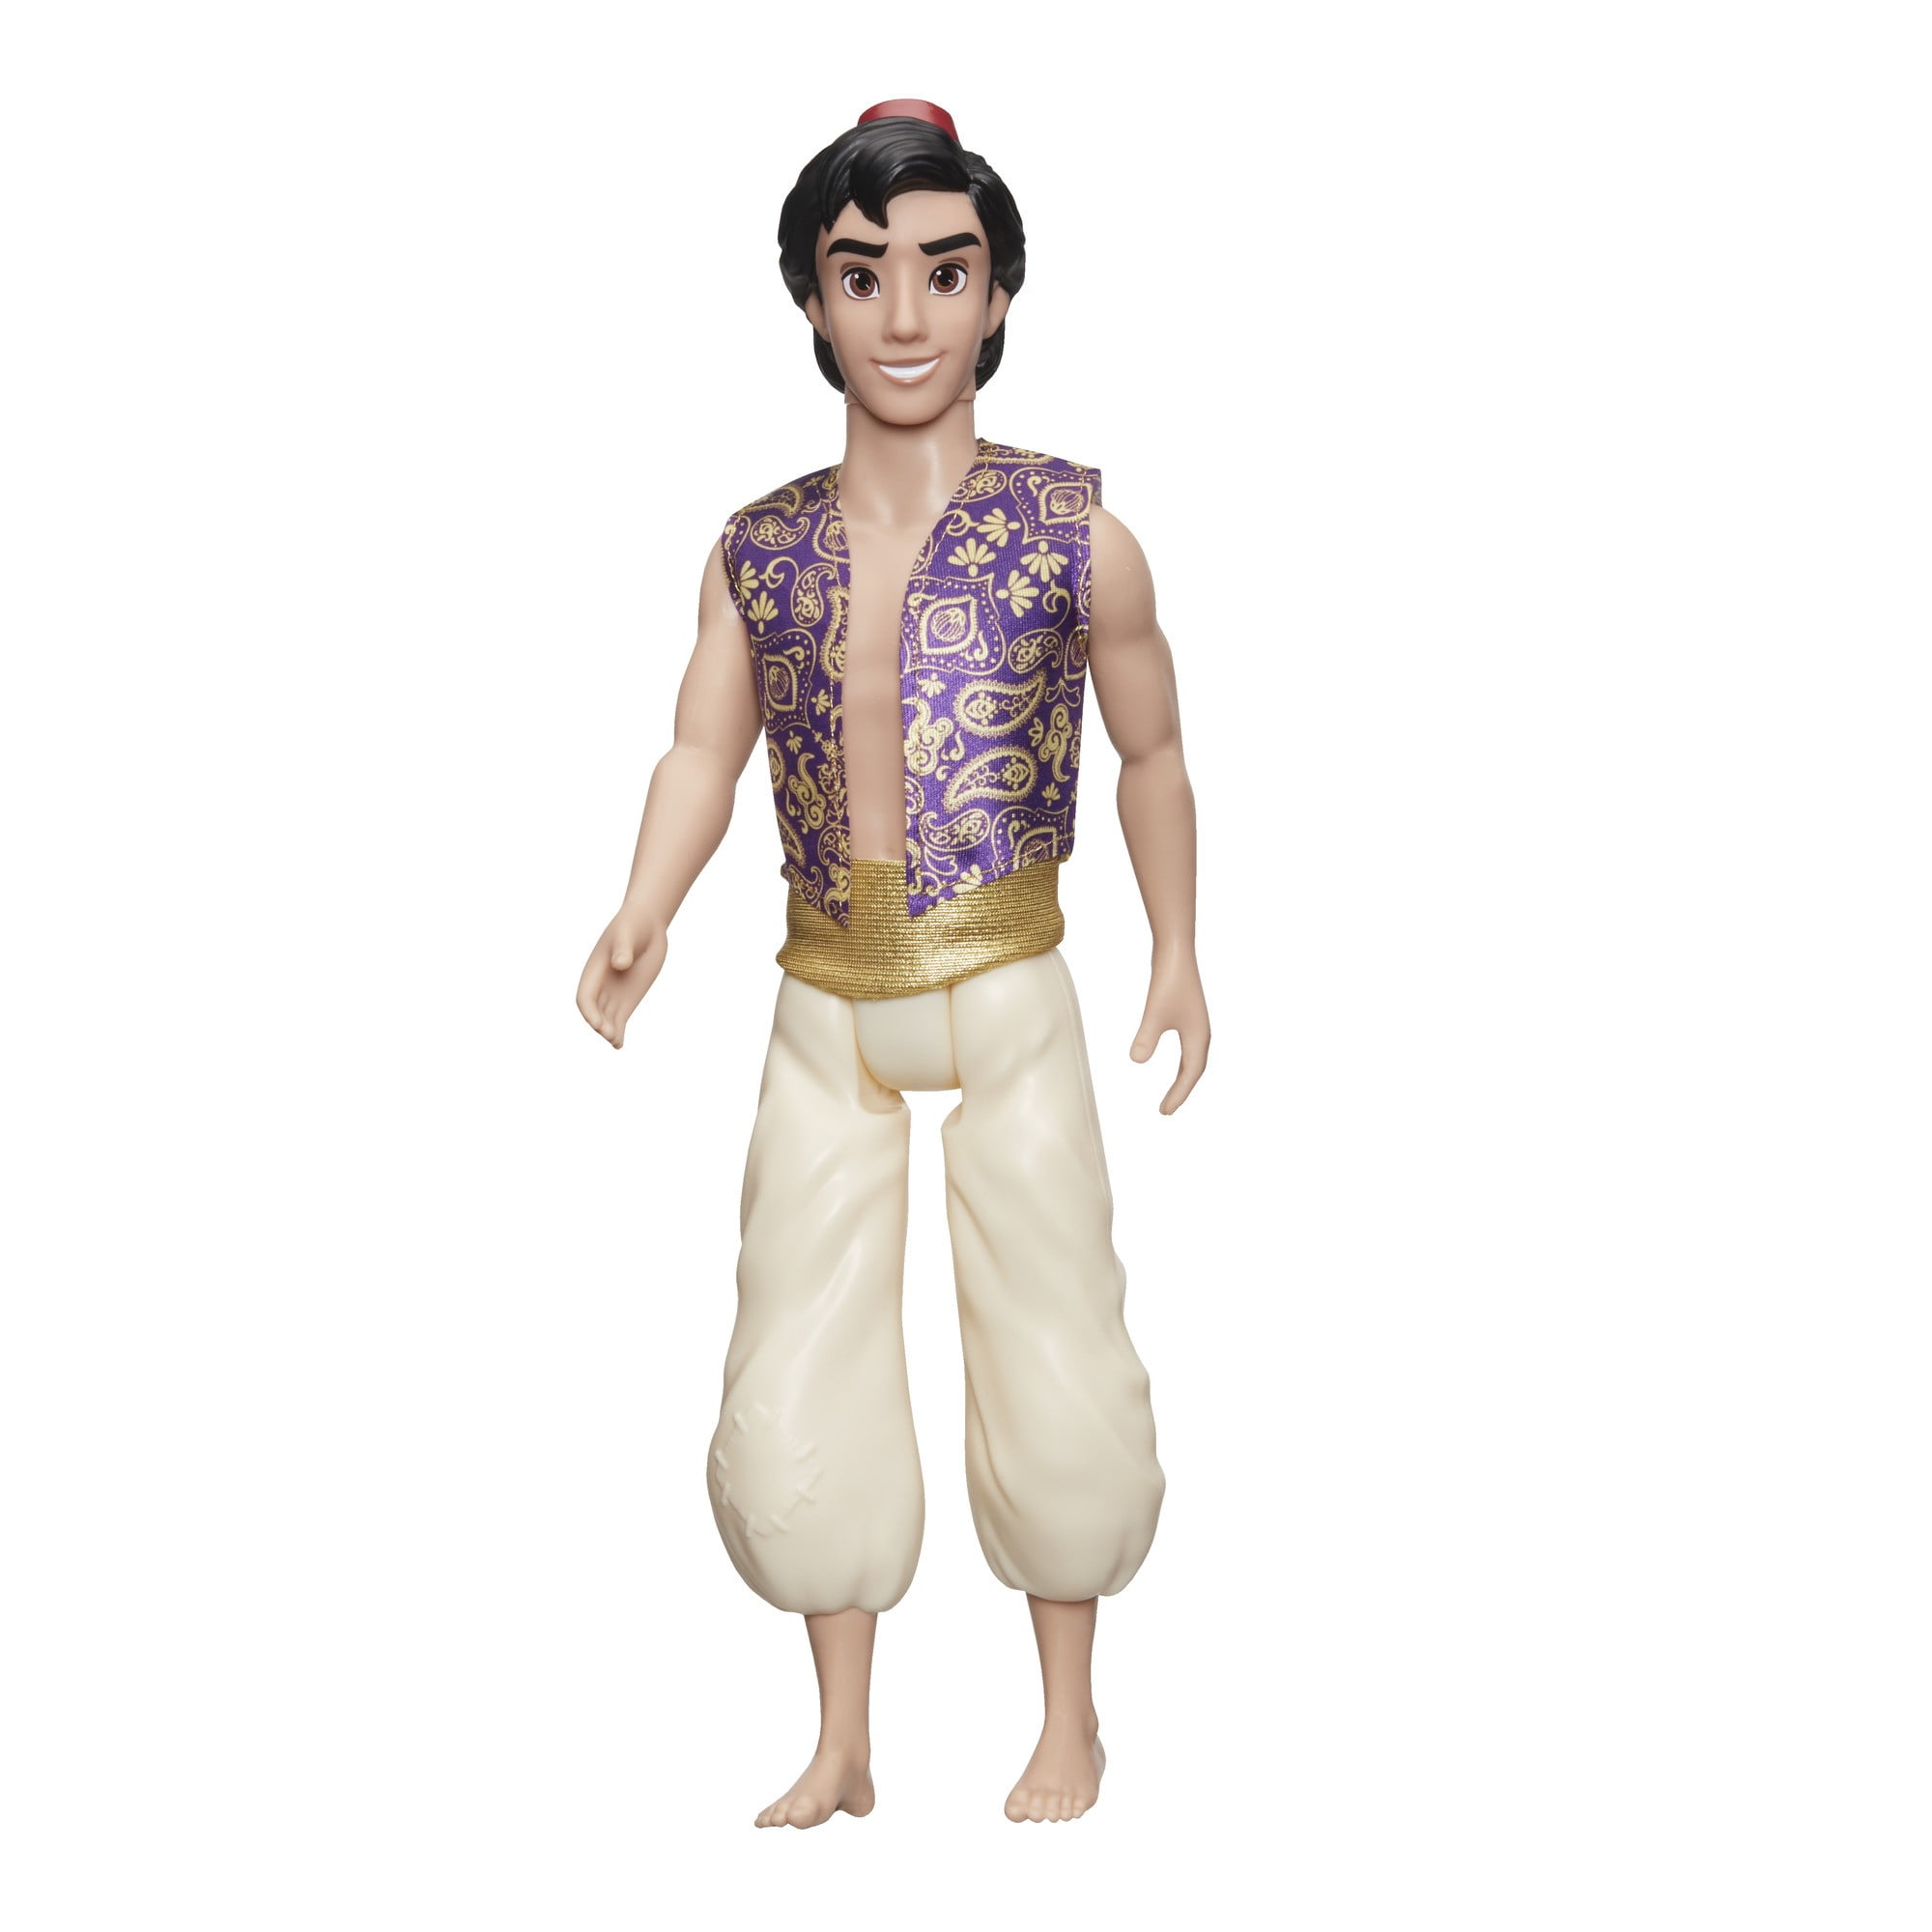 Disney Princess Aladdin, toys for kids 